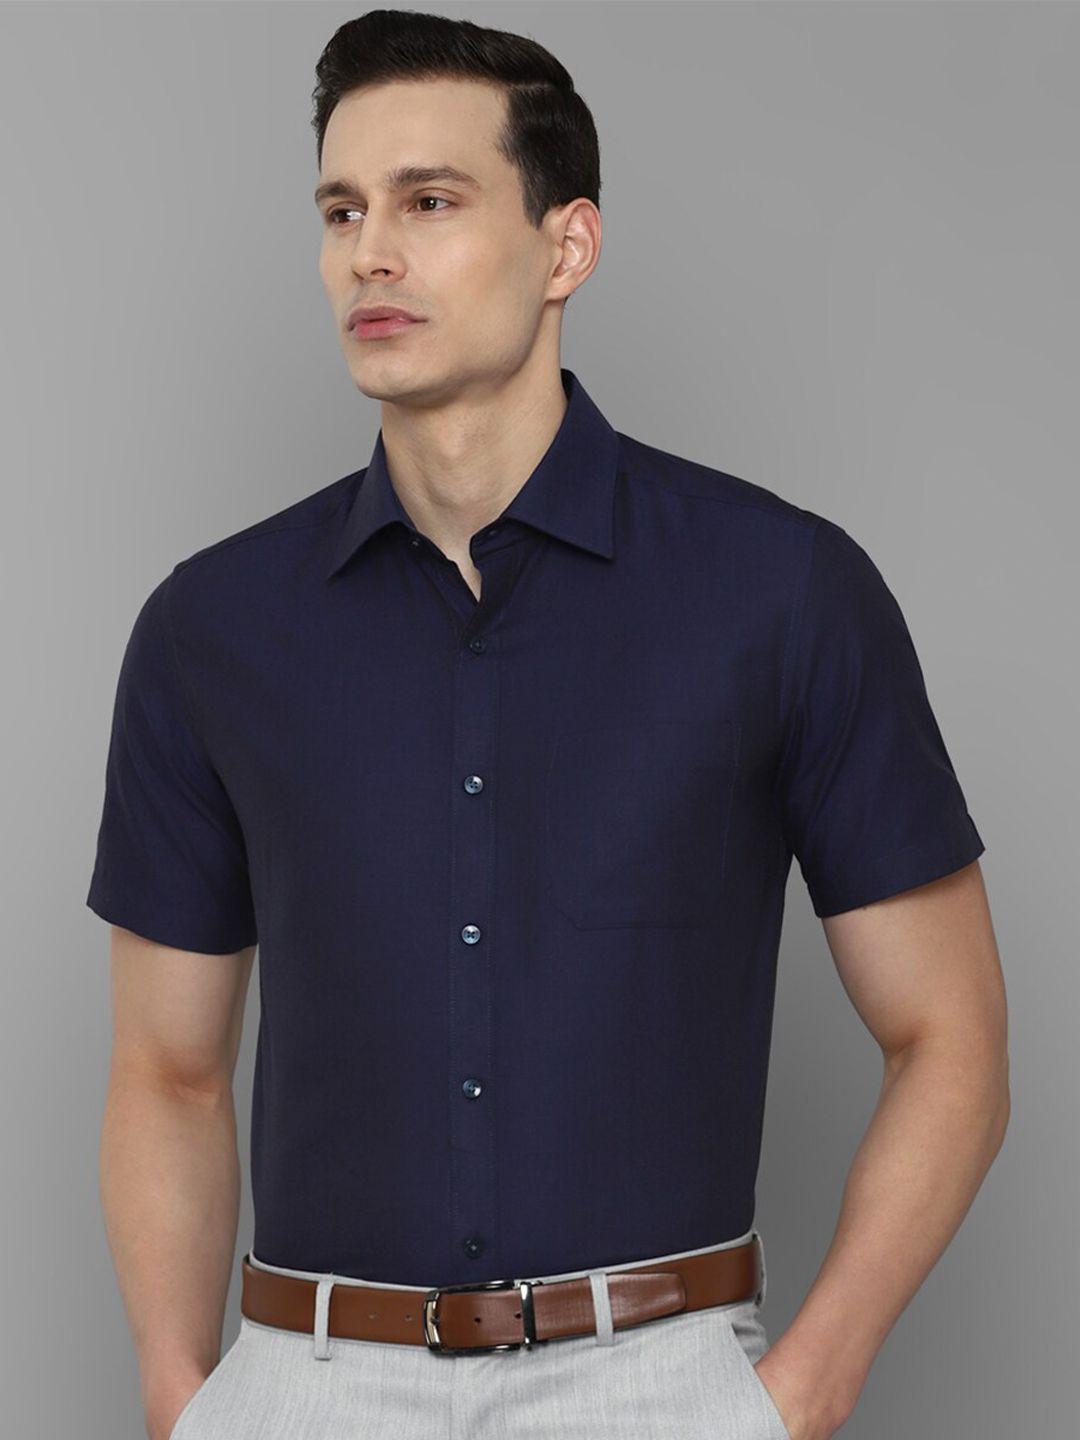 louis philippe men navy blue cotton formal shirt